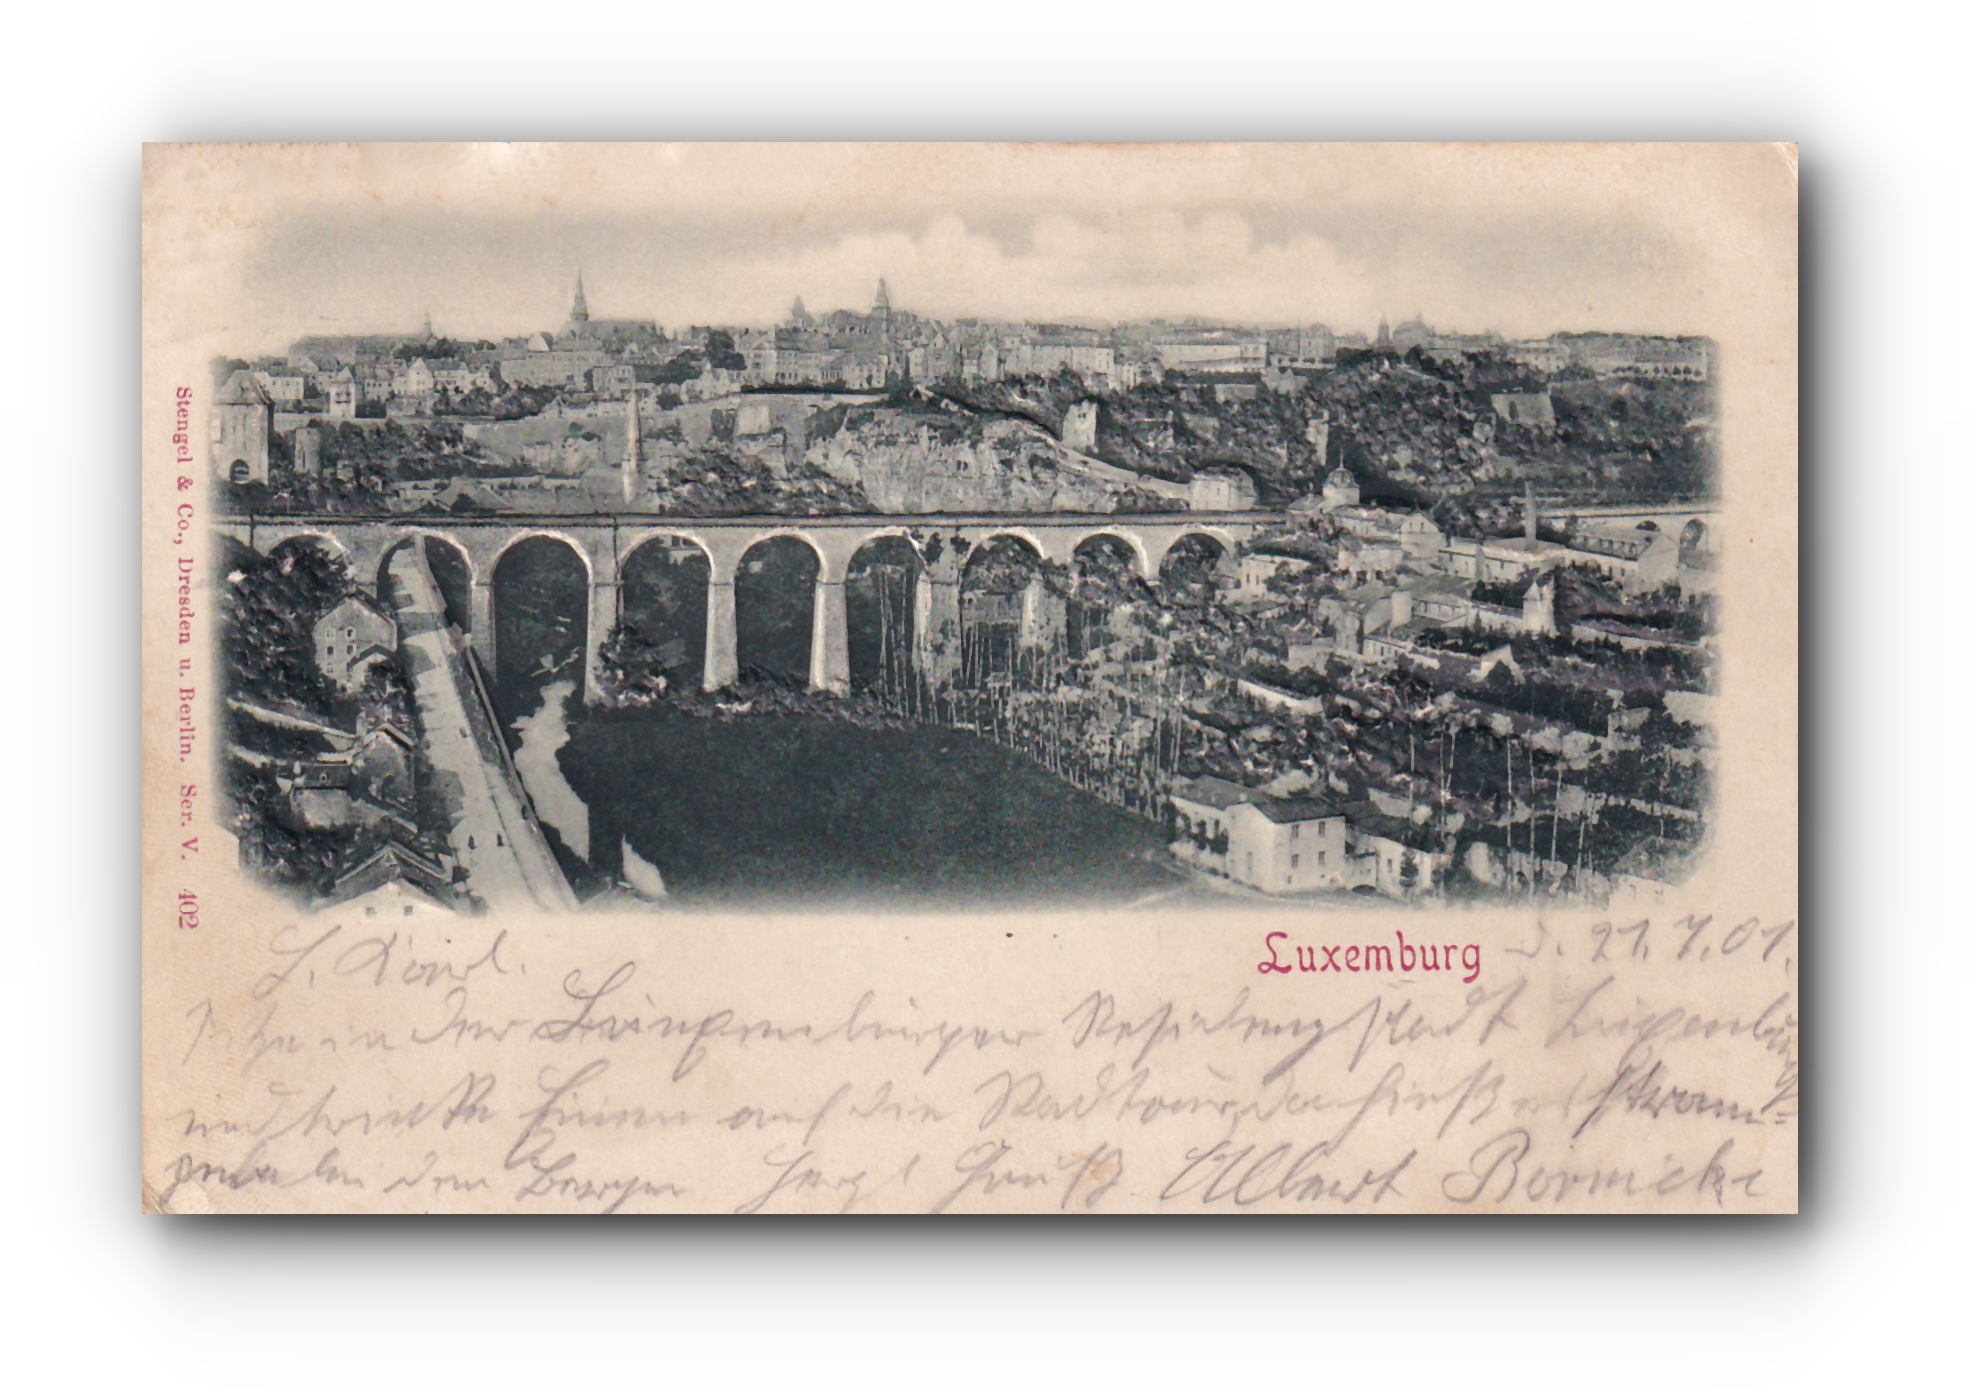 LUXEMBURG  -21.07.1901 - carte papier  gaufré